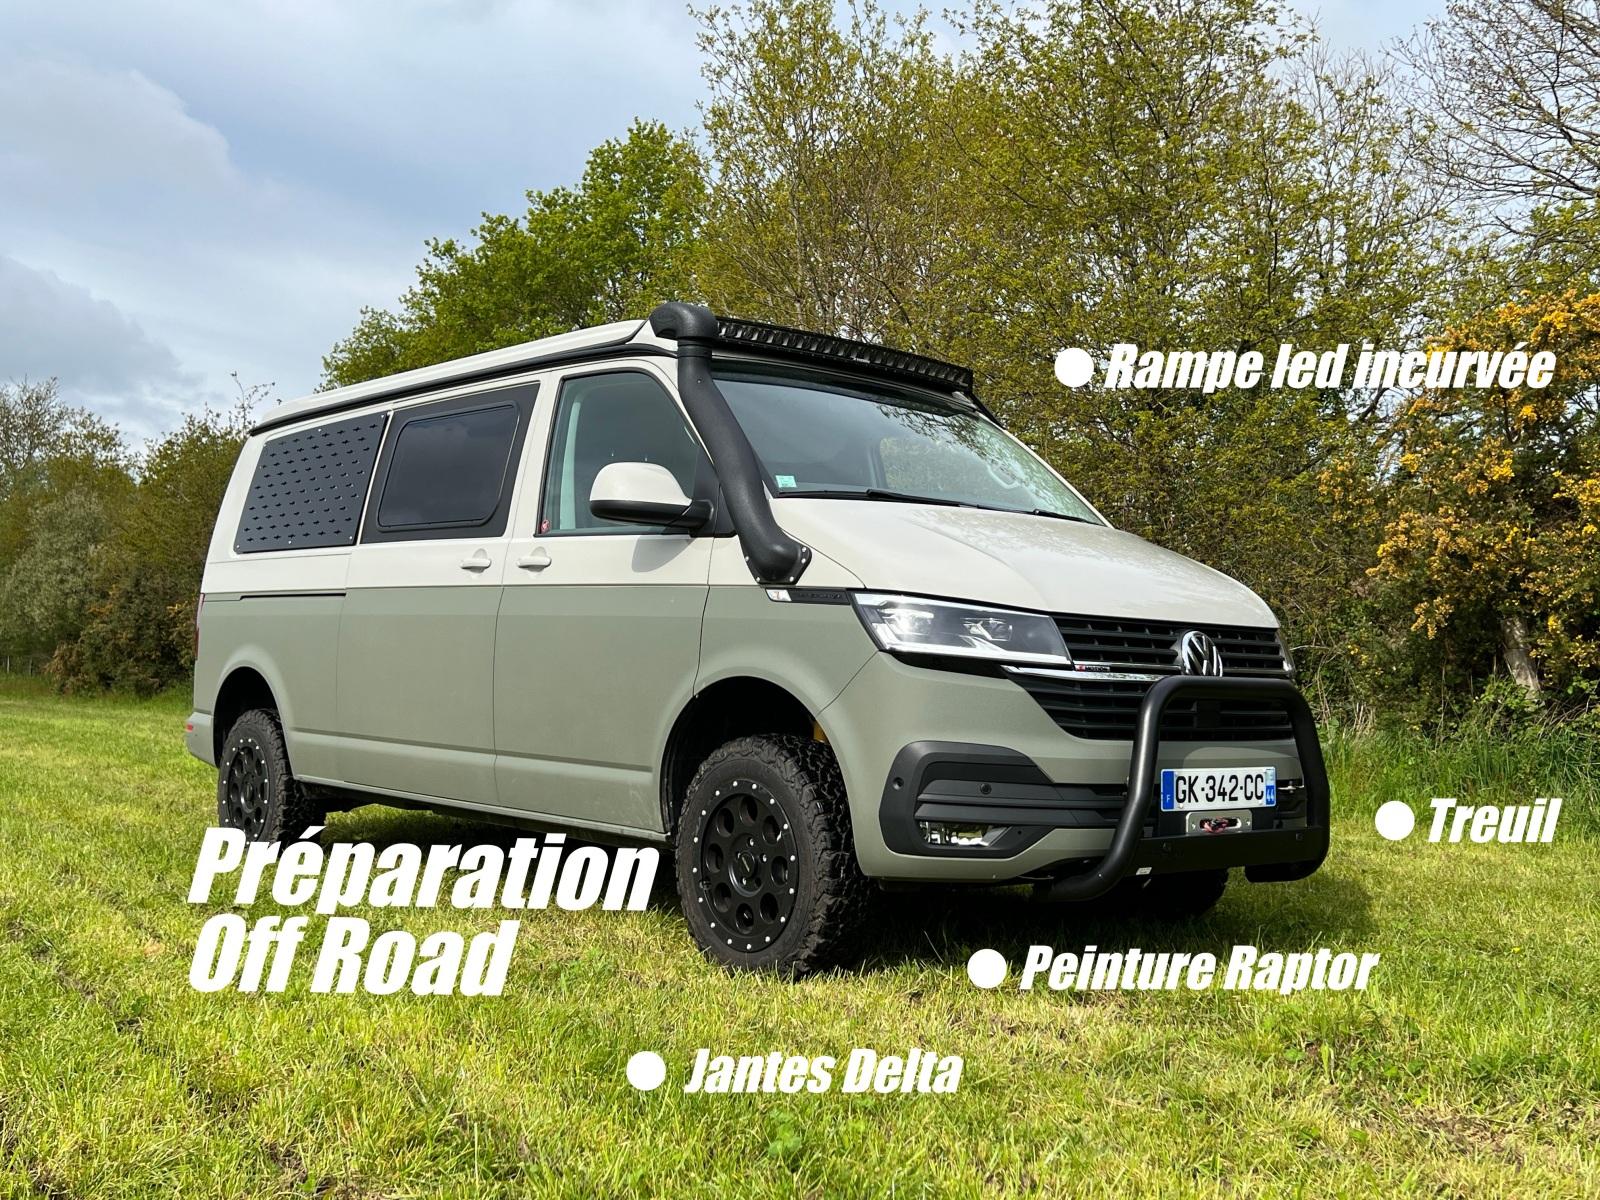 Wood & Van : préparation off-road pour Volkswagen 4x4